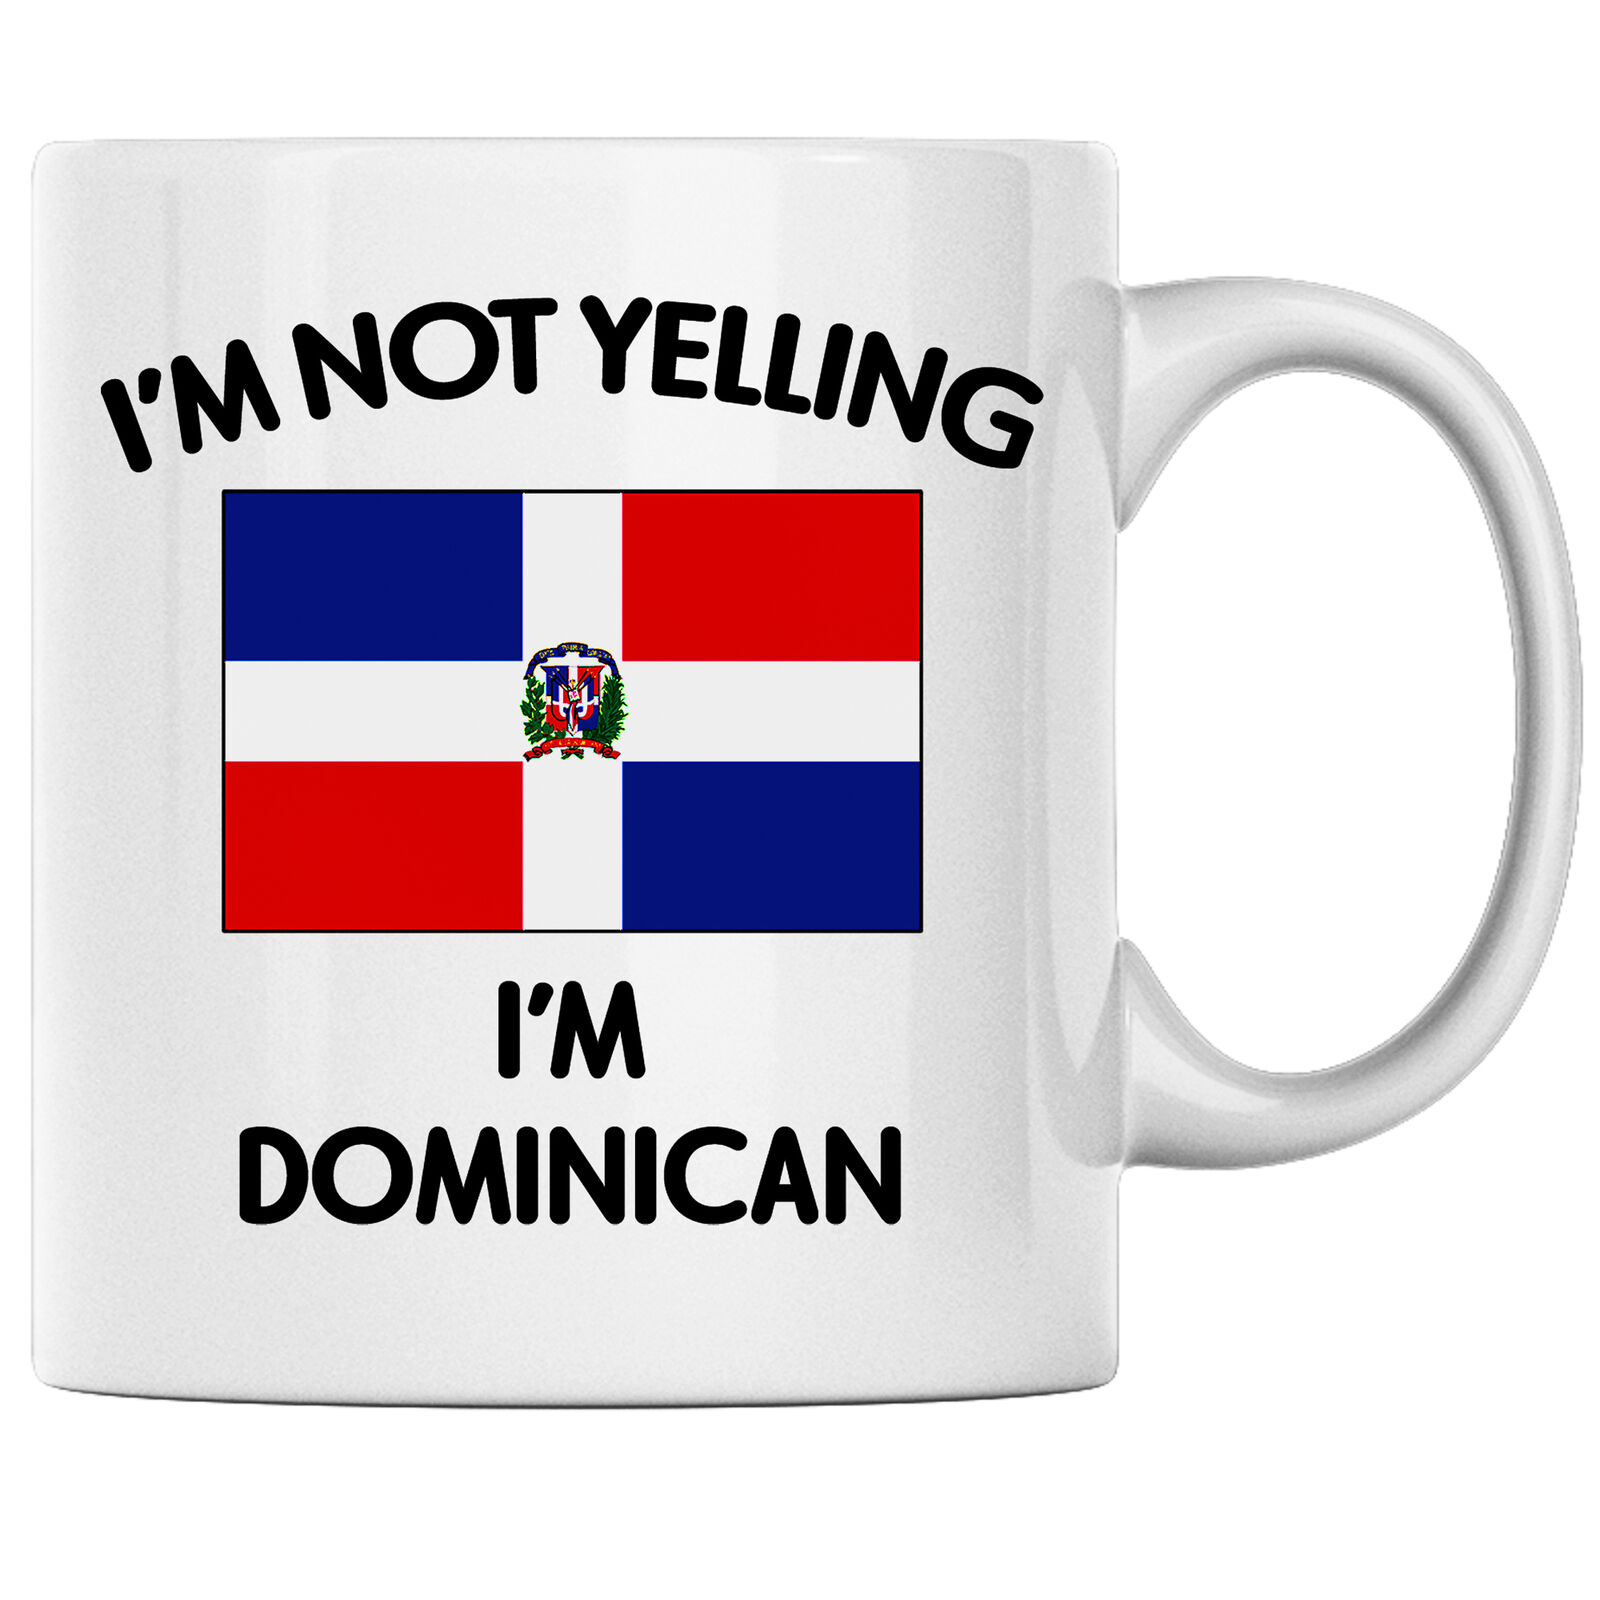 I'm Not Yelling I'm Dominican Funny Coffee Mug Heritage Pride